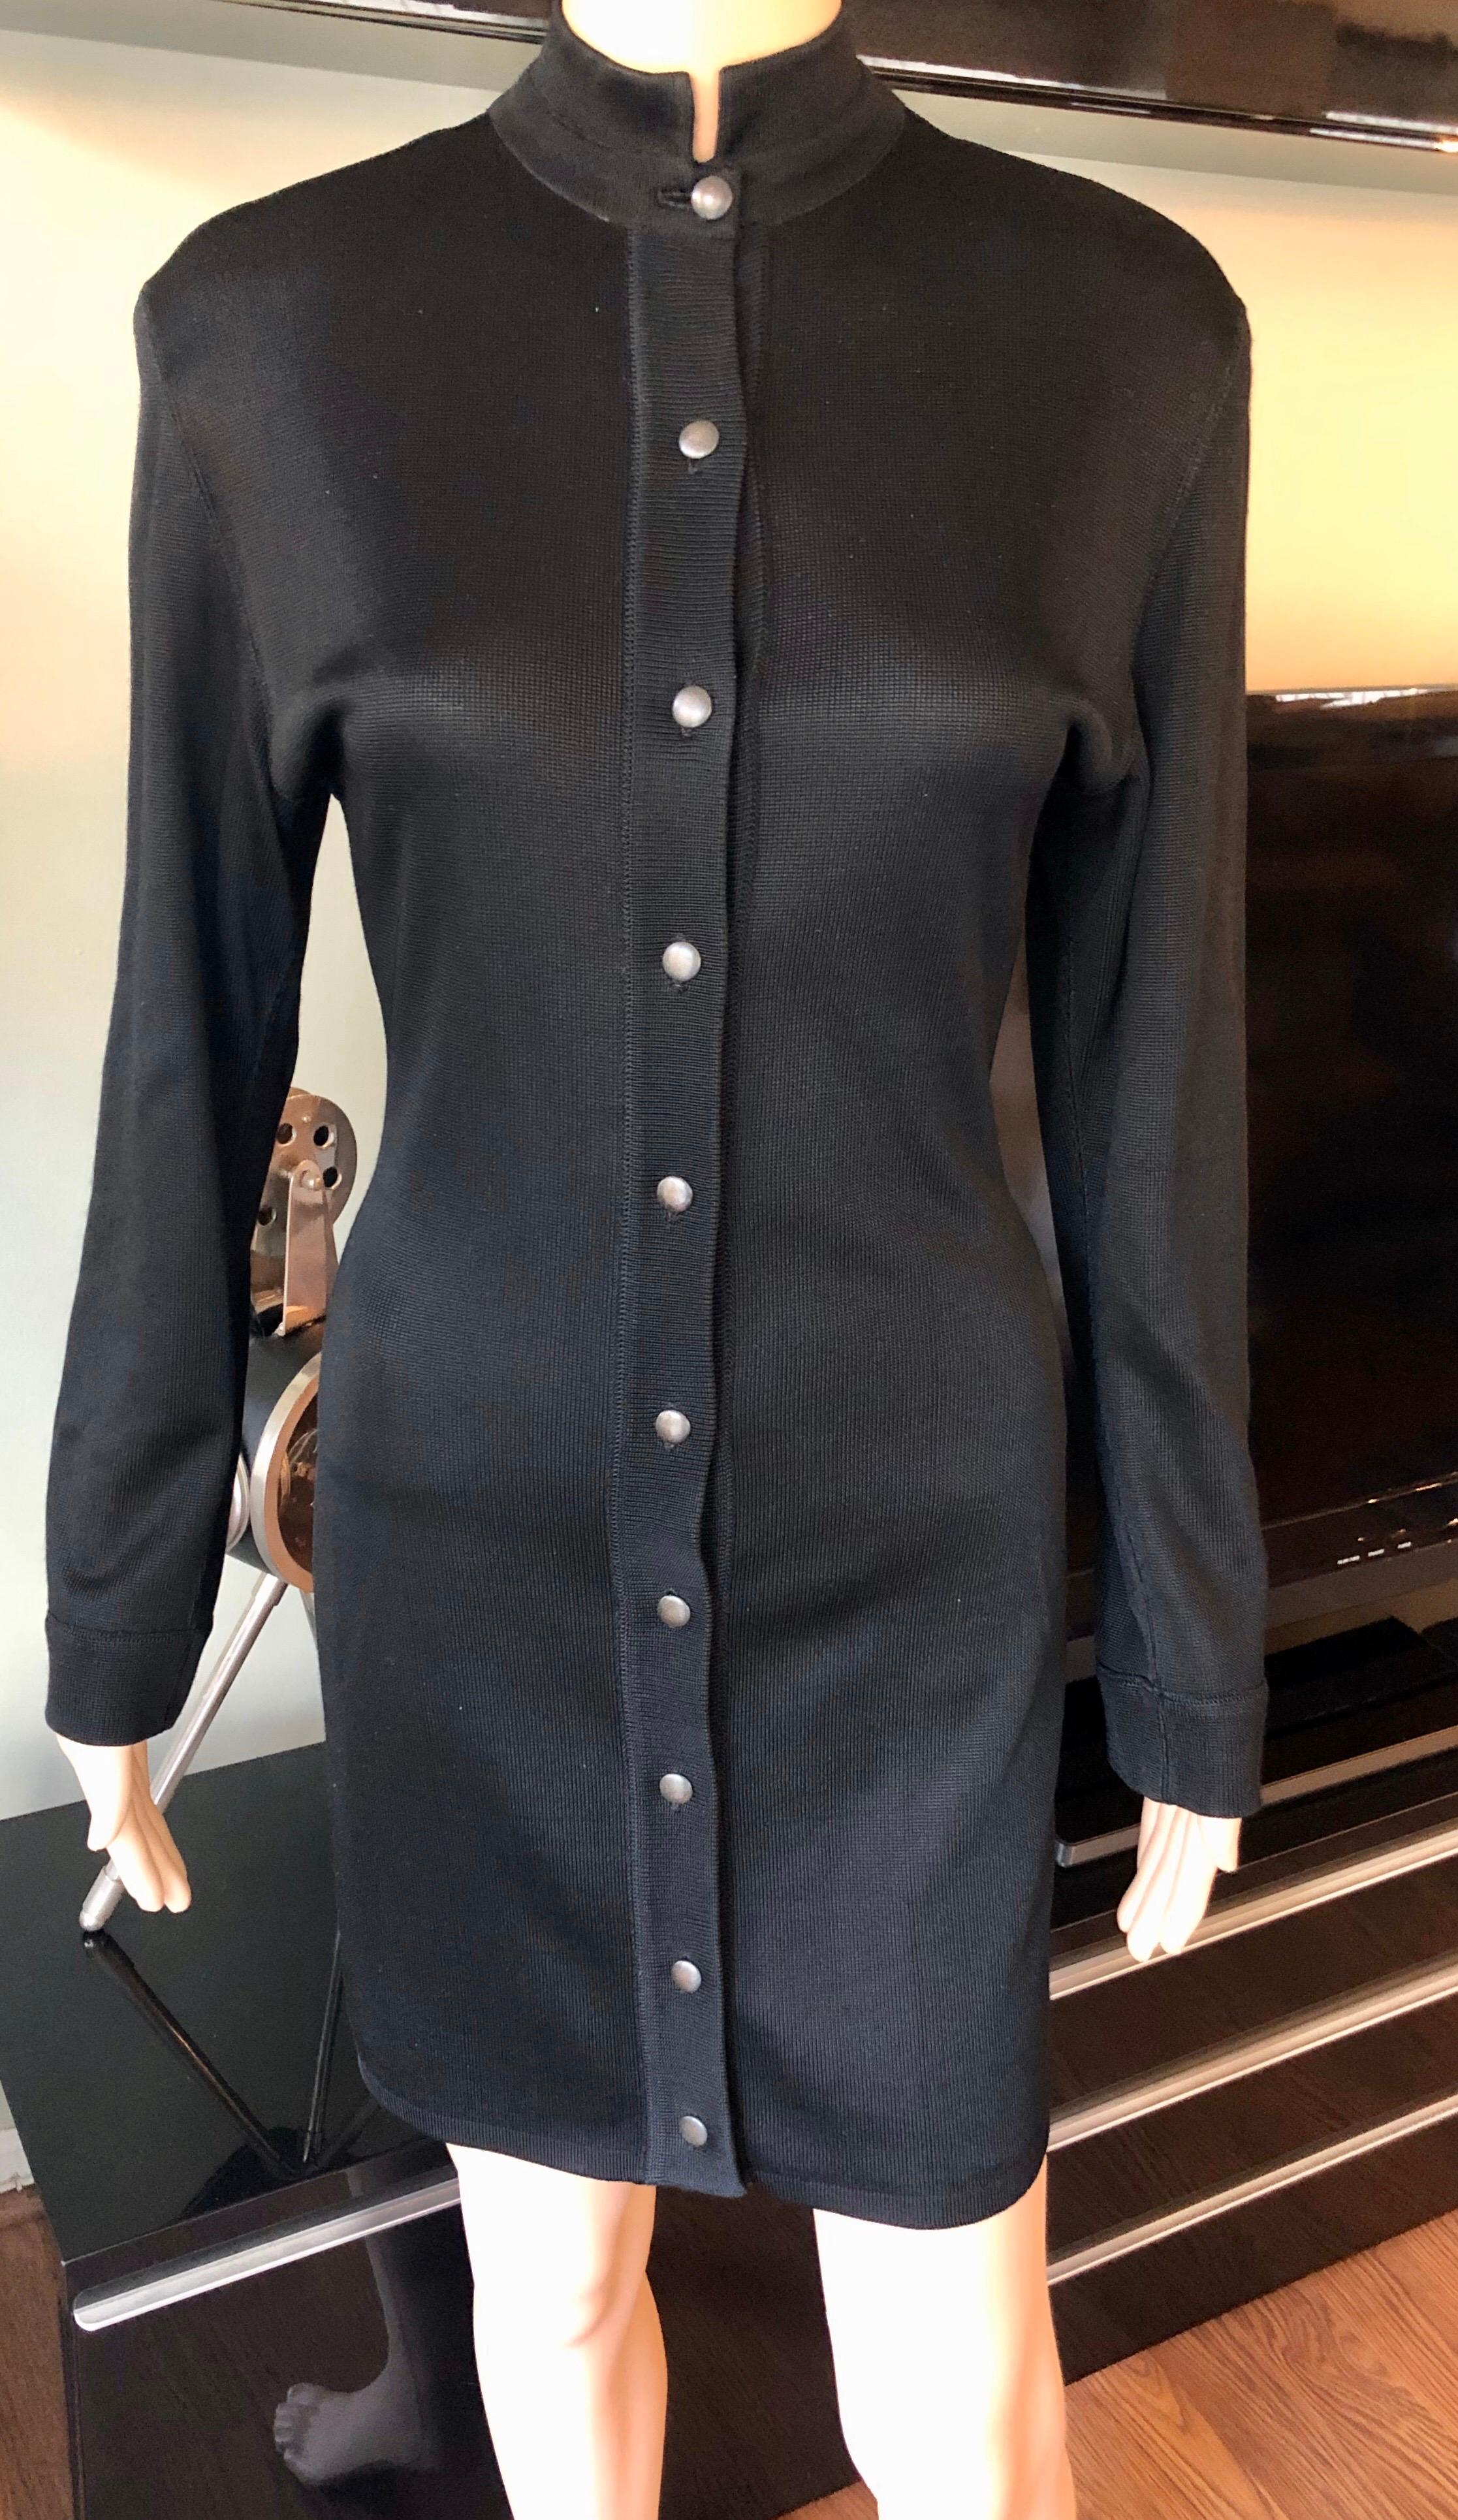 Azzedine Alaia Vintage Buttoned Knit Black Dress Size S

Alaïa black dress featuring mock neck and button closures at front. 
